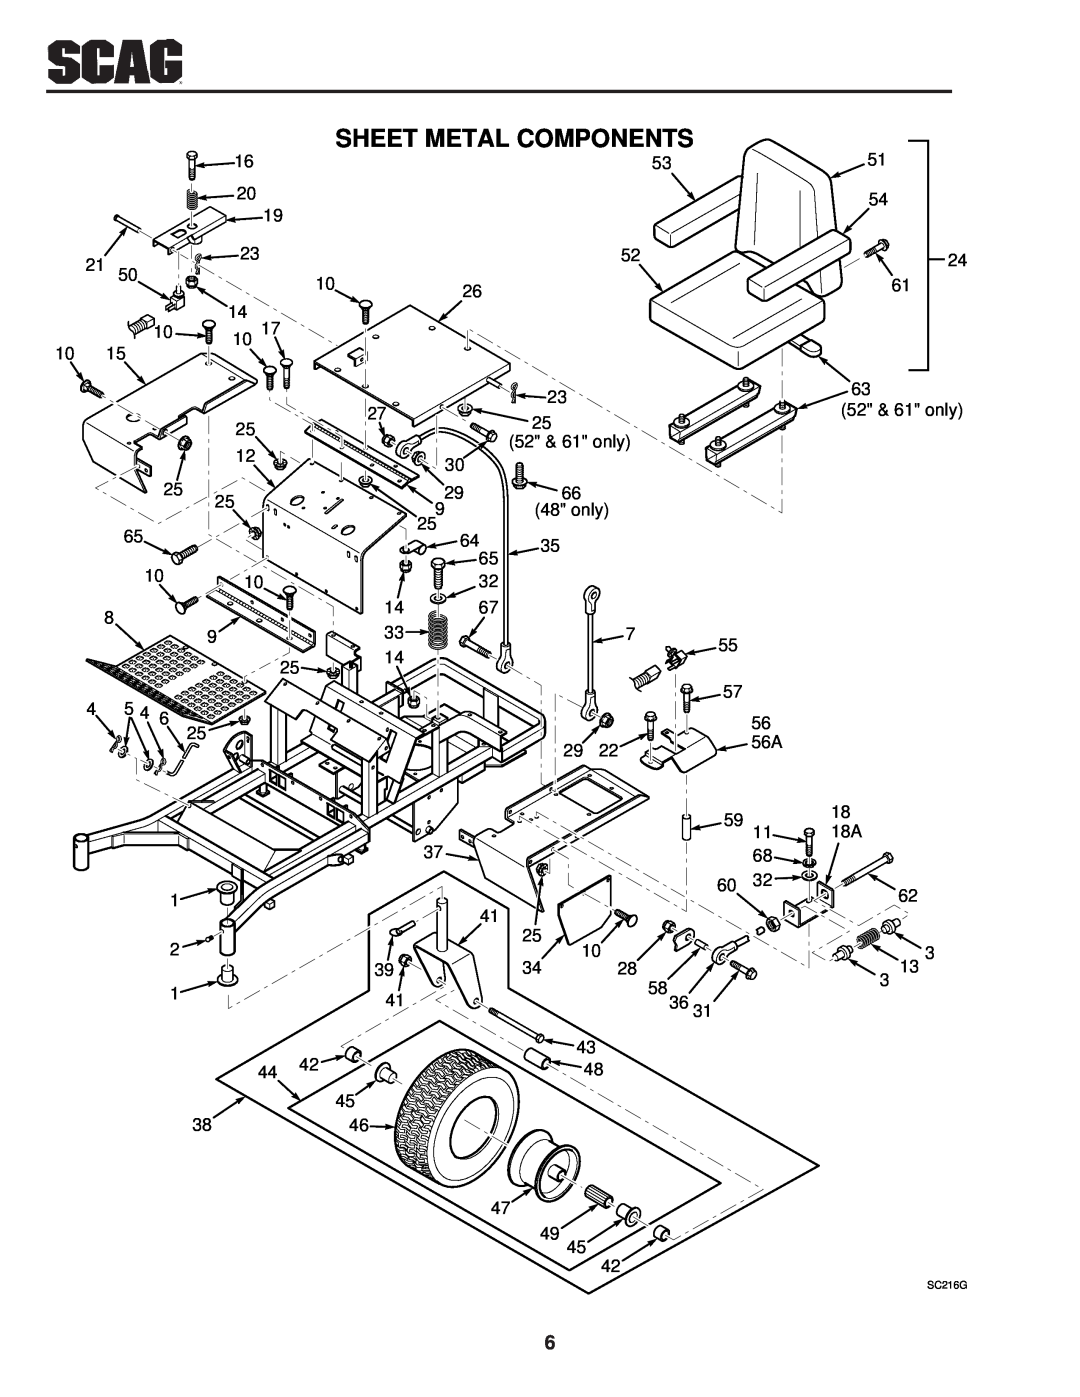 Scag Power Equipment SSZ operating instructions Sheet Metal Components, SC216G 